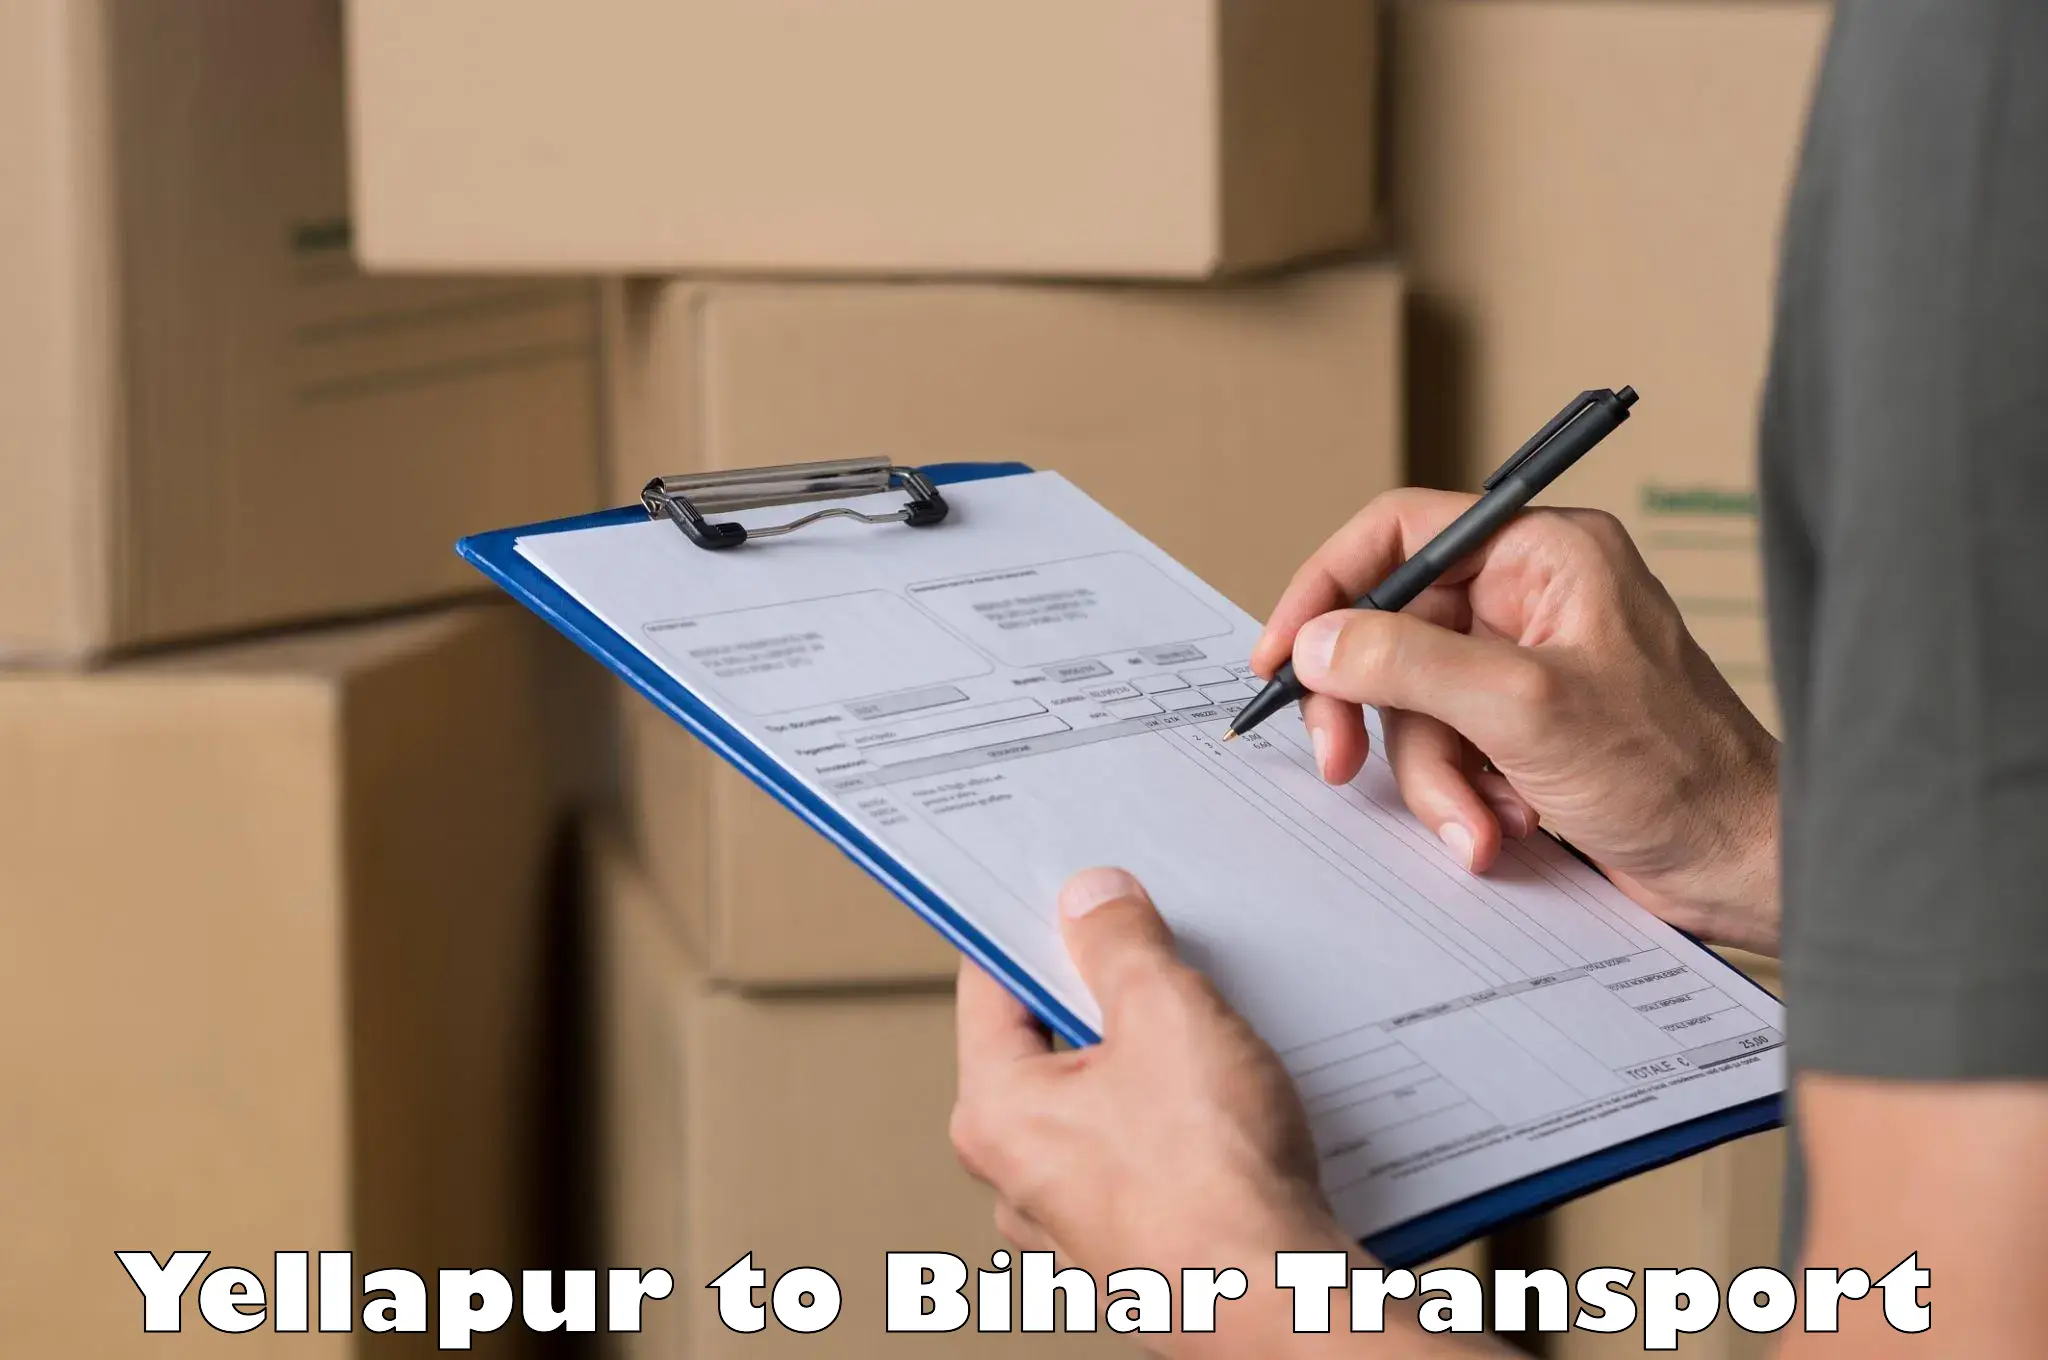 Delivery service Yellapur to Bihar